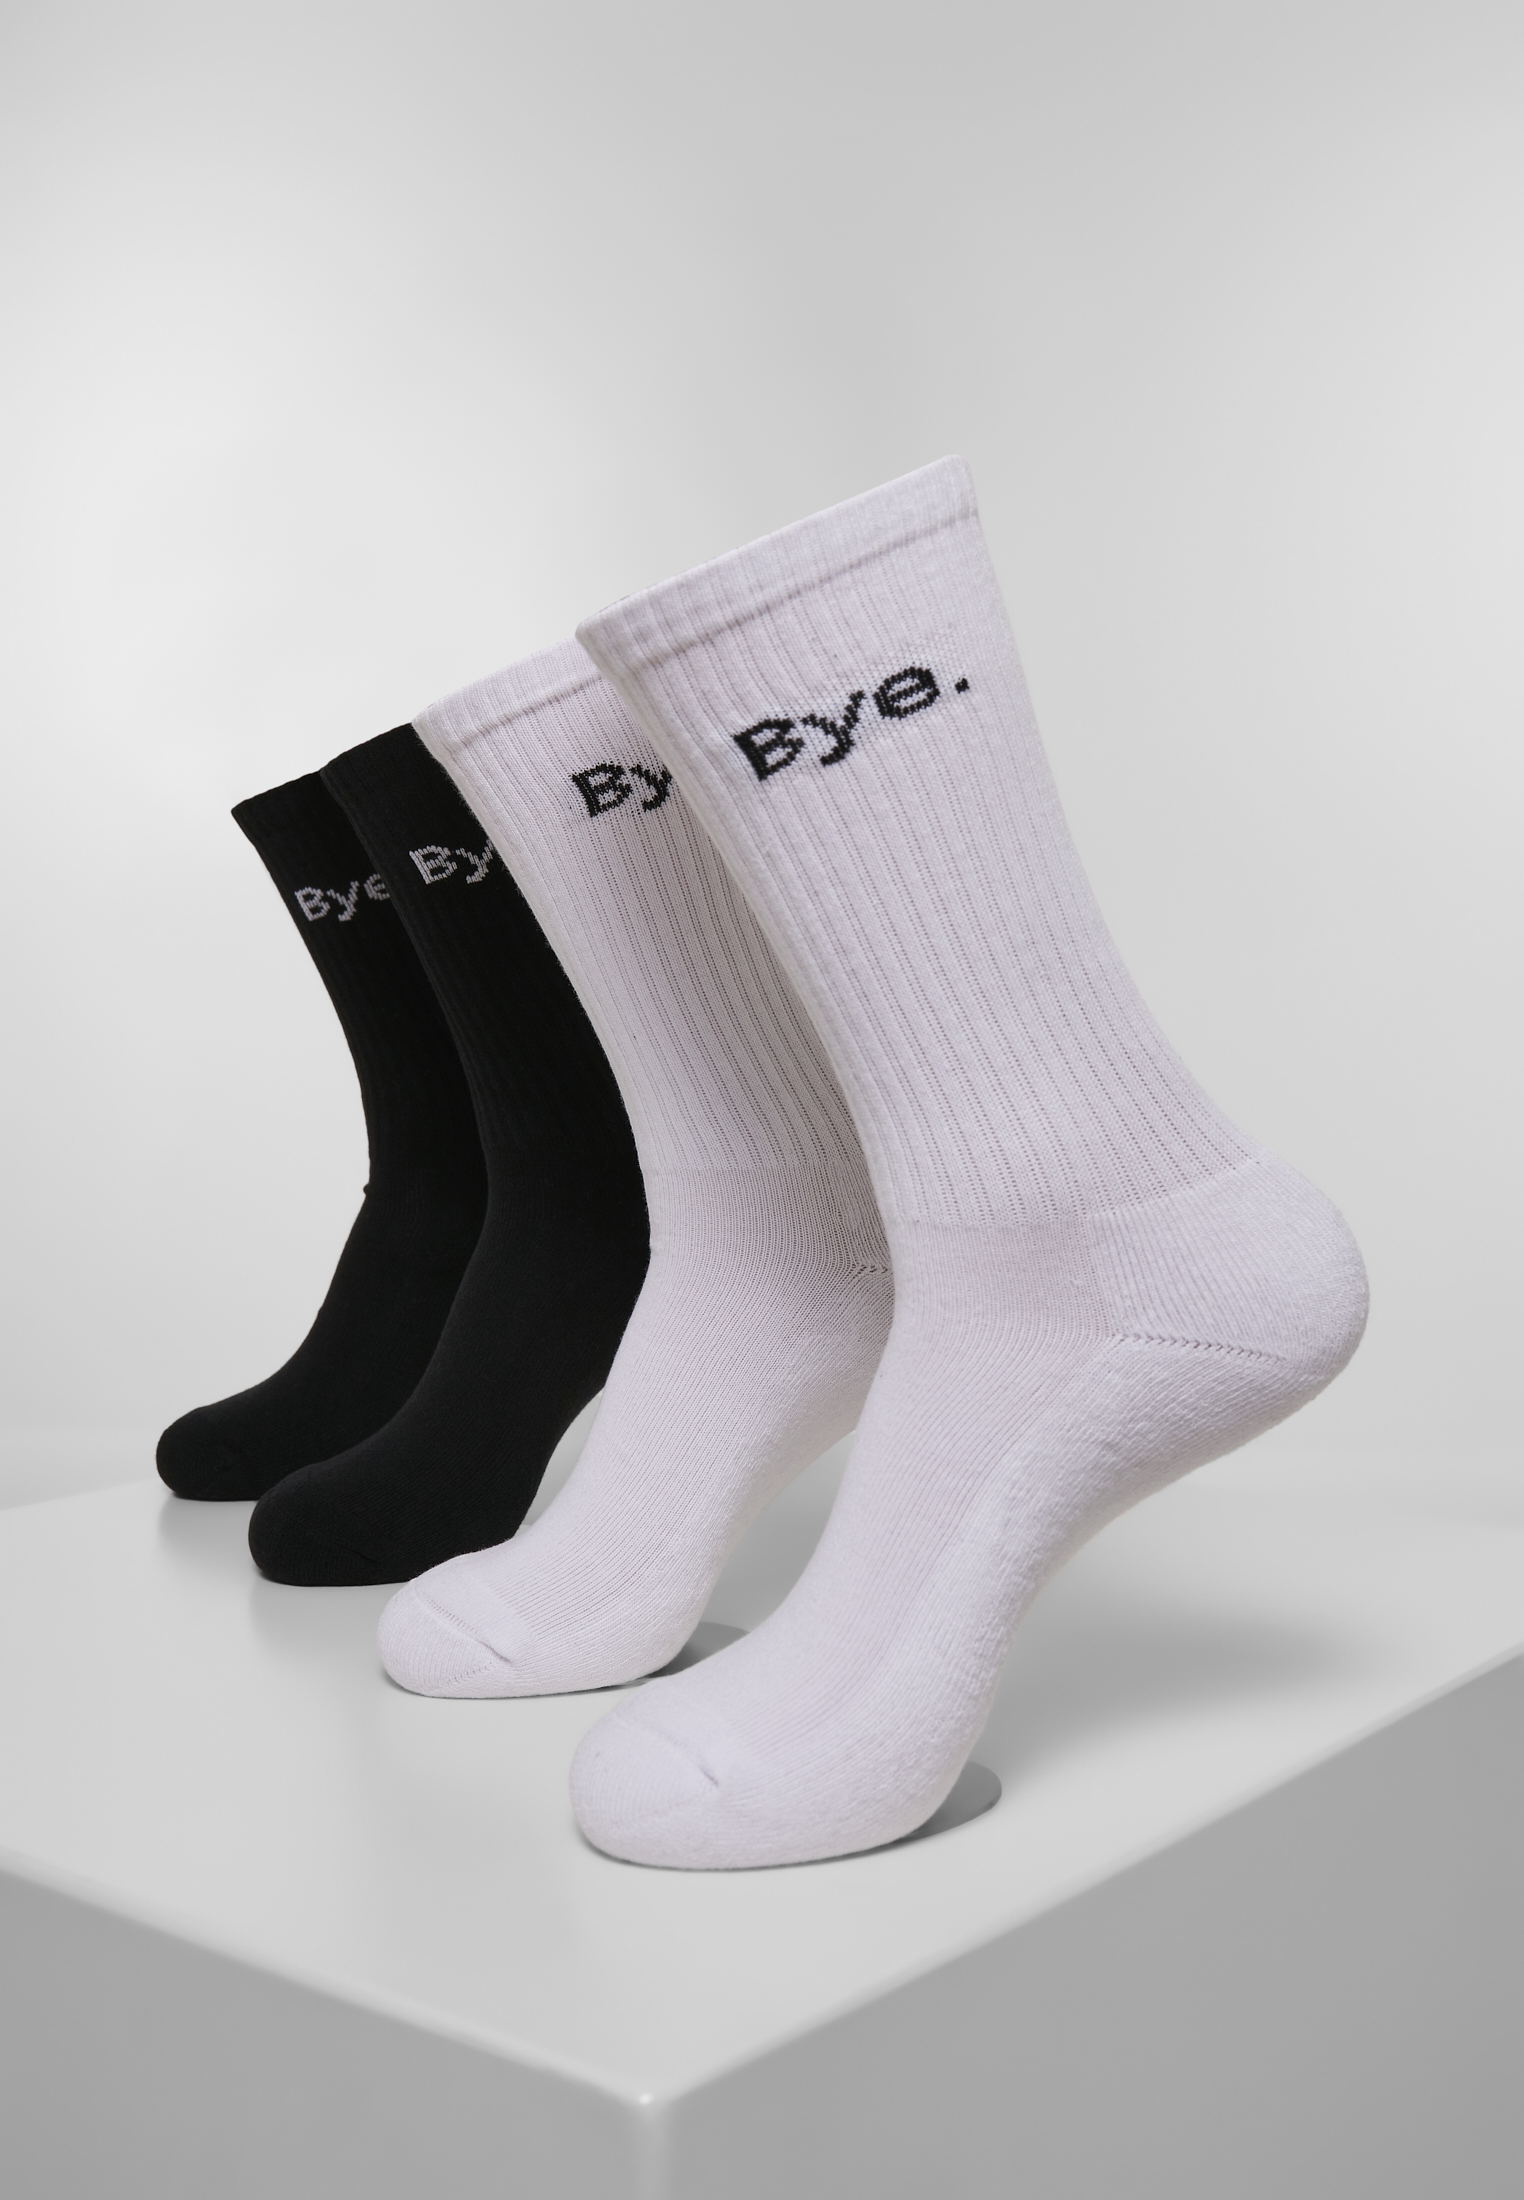 HI - Bye Socks 4-Pack black/white